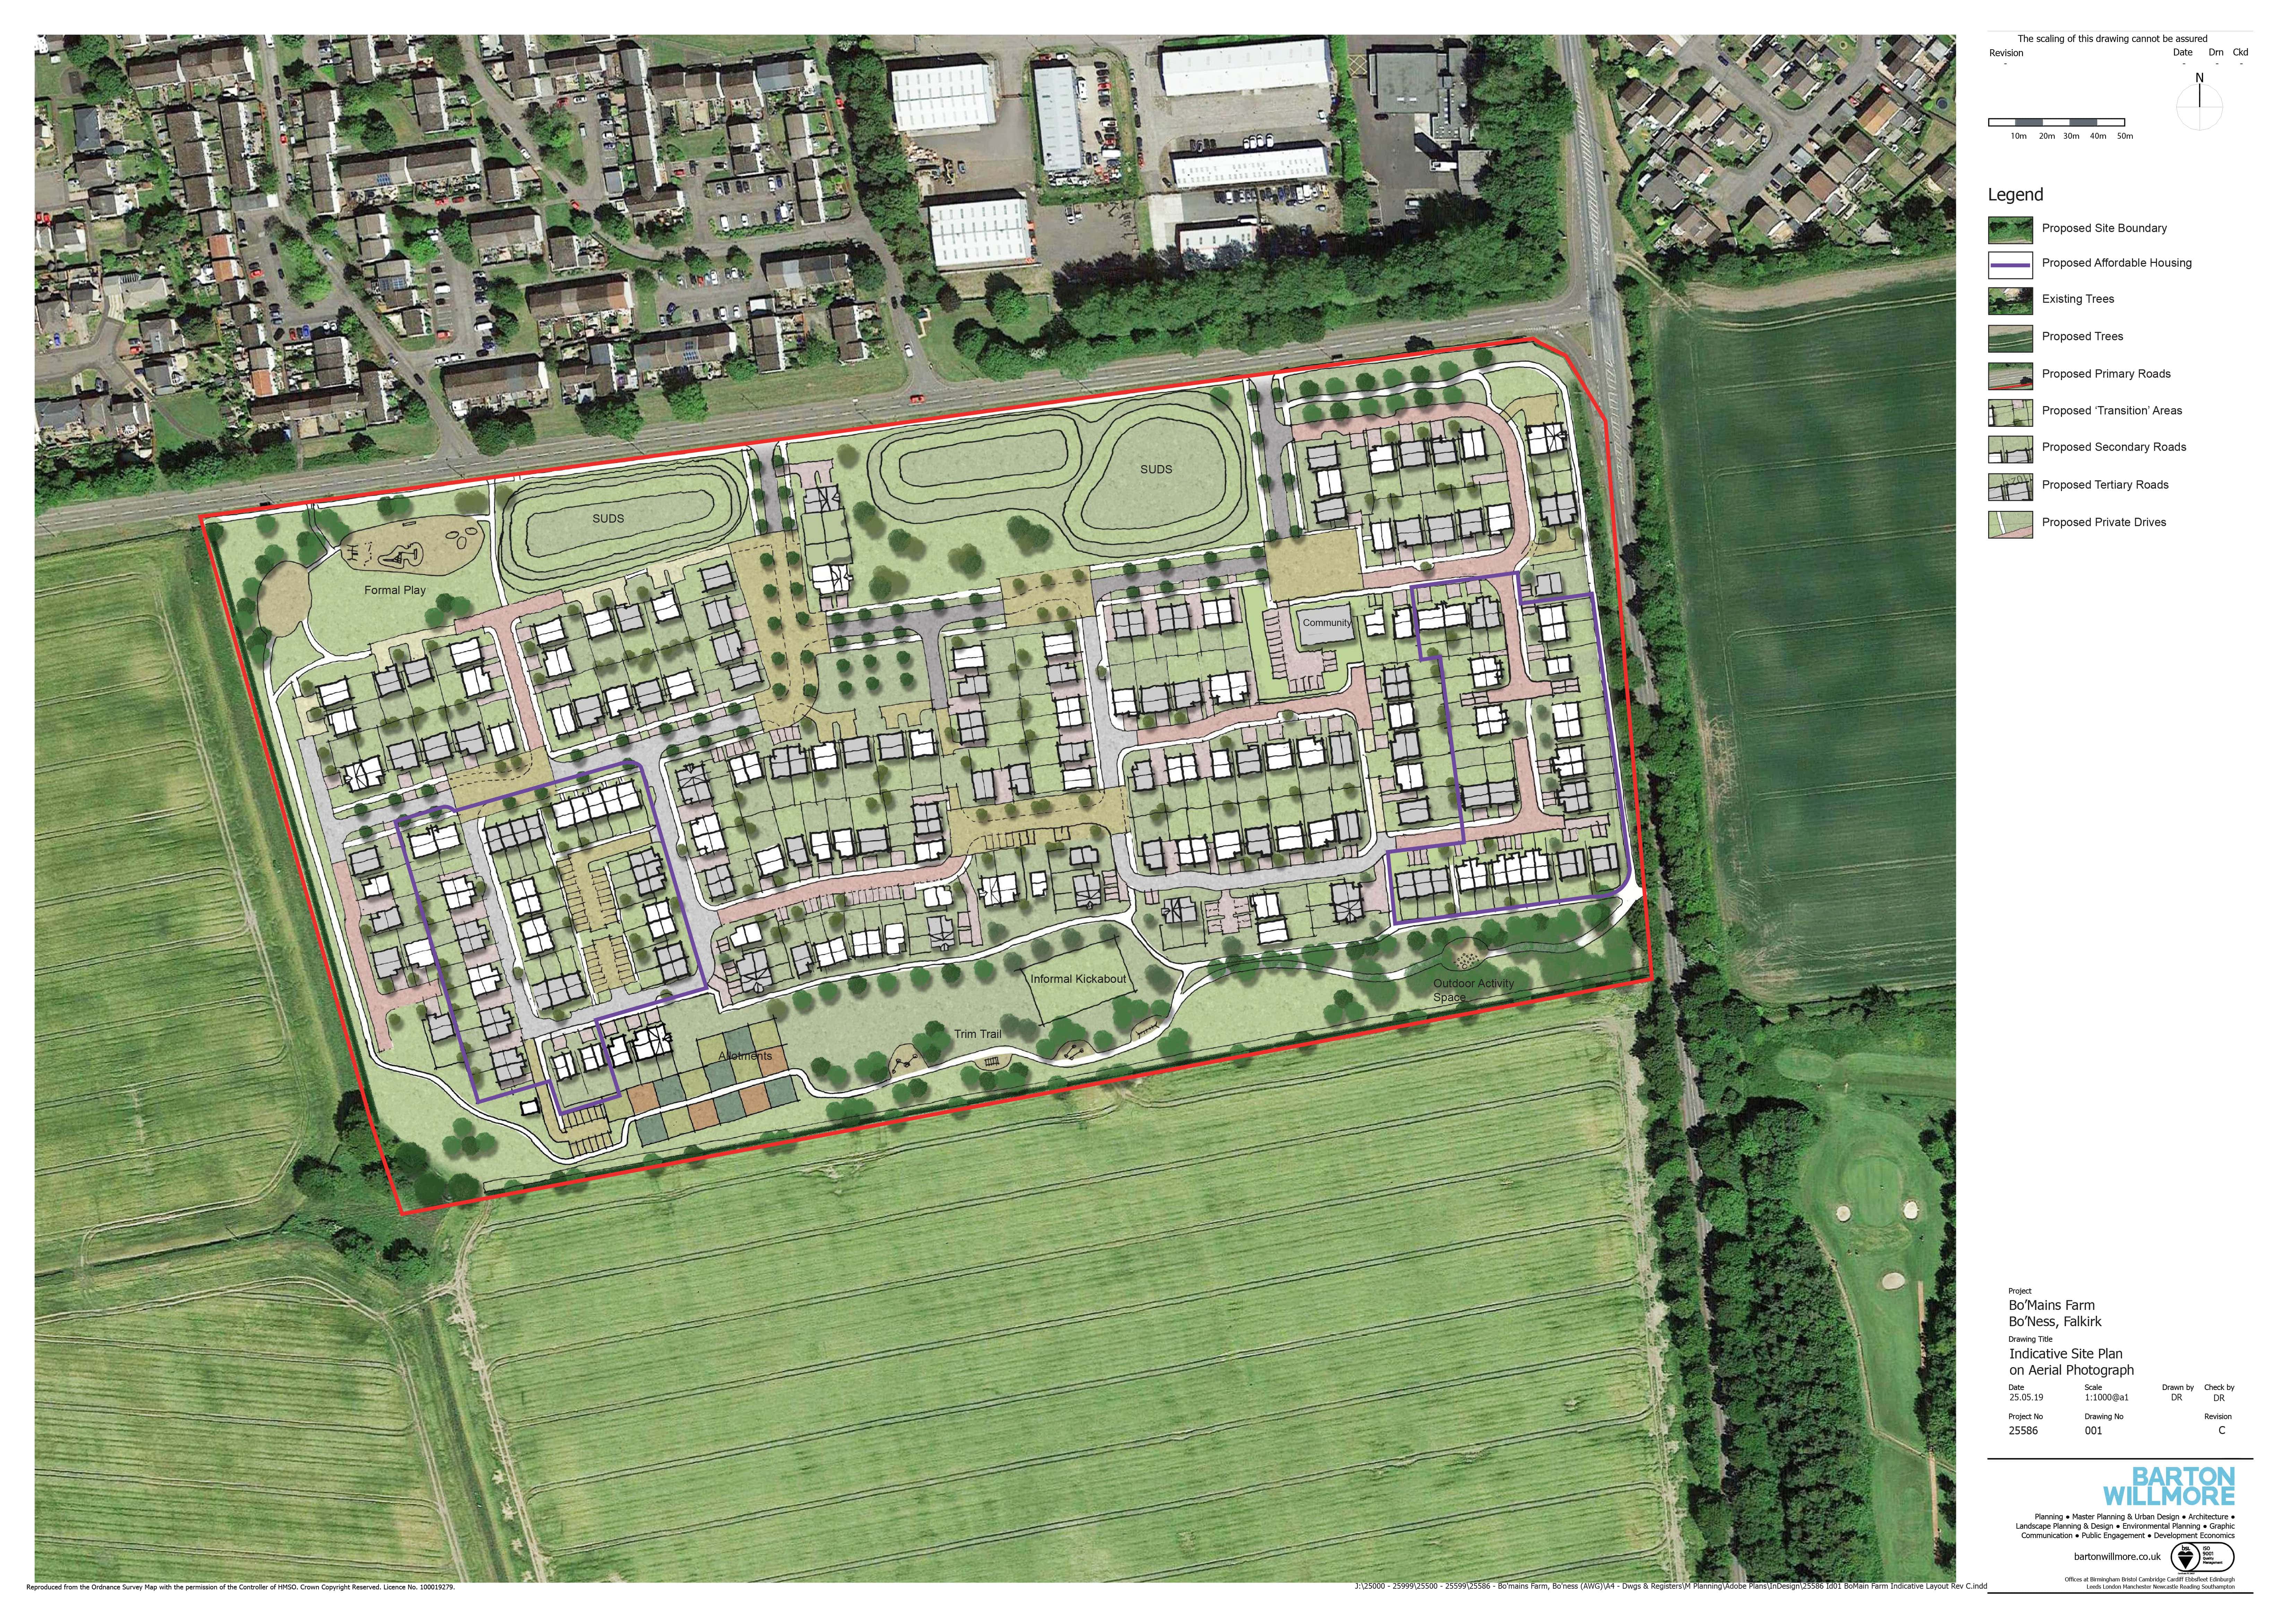 Plans lodged for £30m housing development in Bo’ness